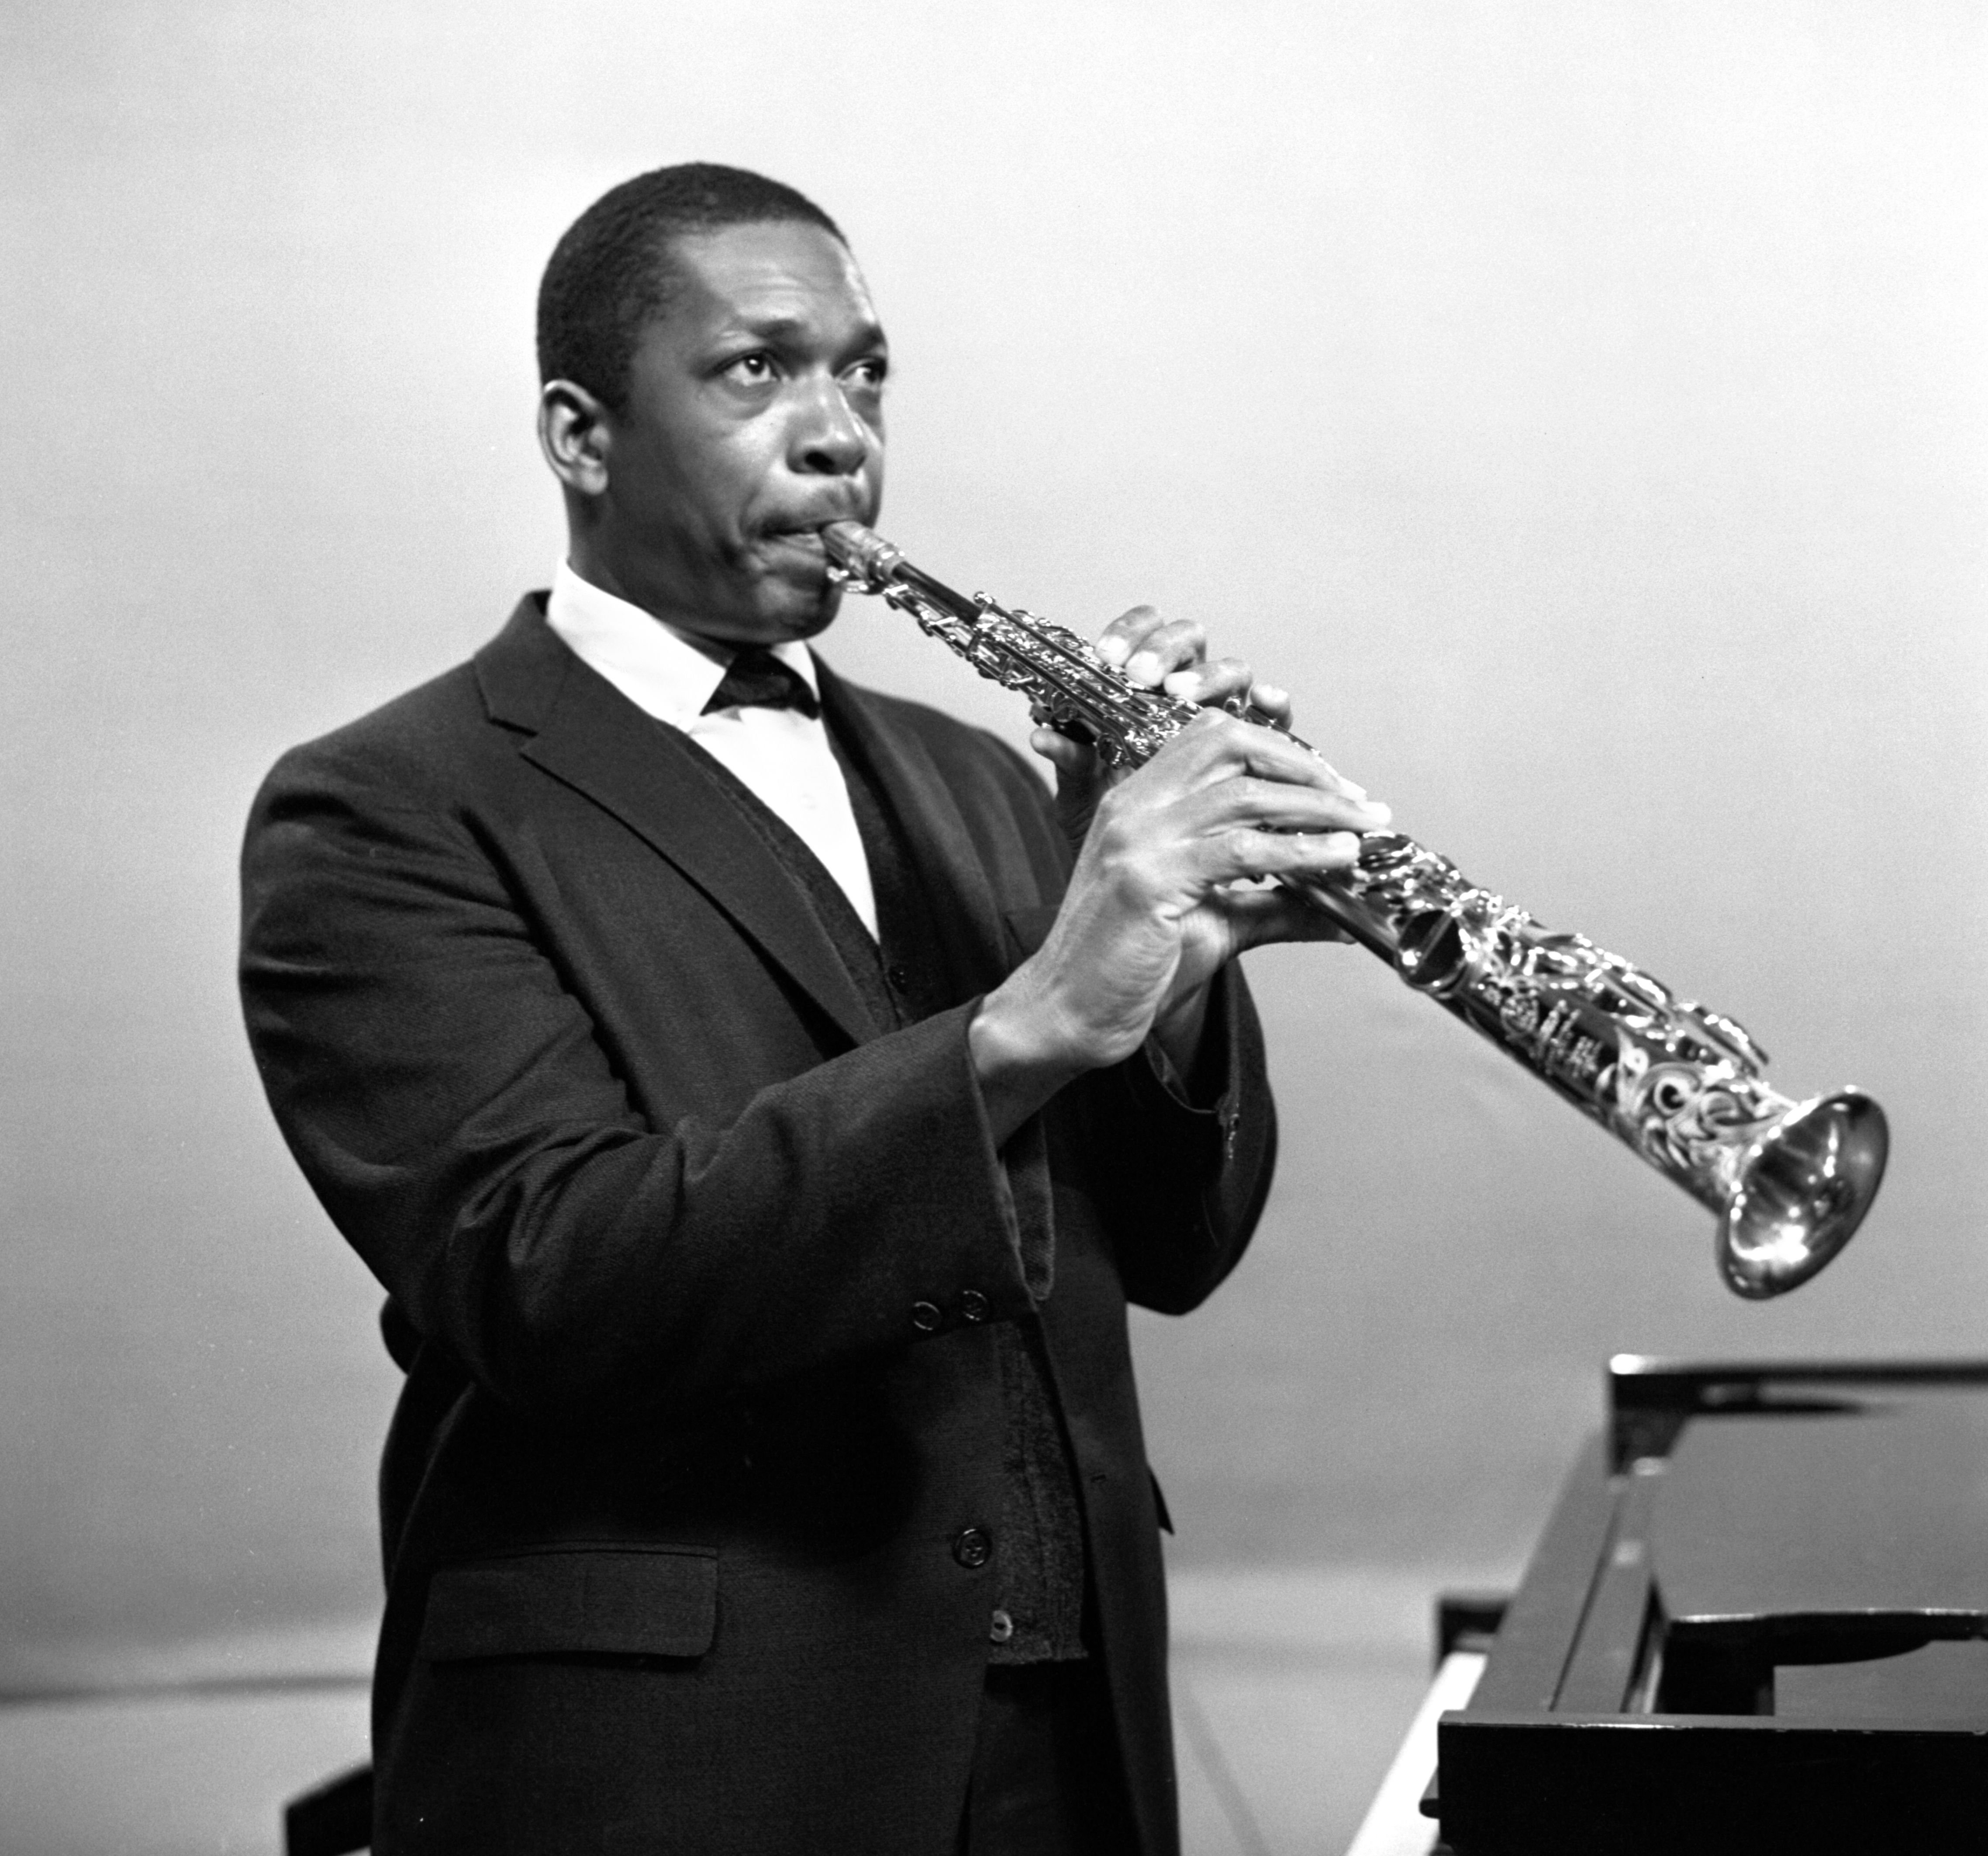 Saxophonist John Coltrane Created 'Alabama' as a Response to a Tragic